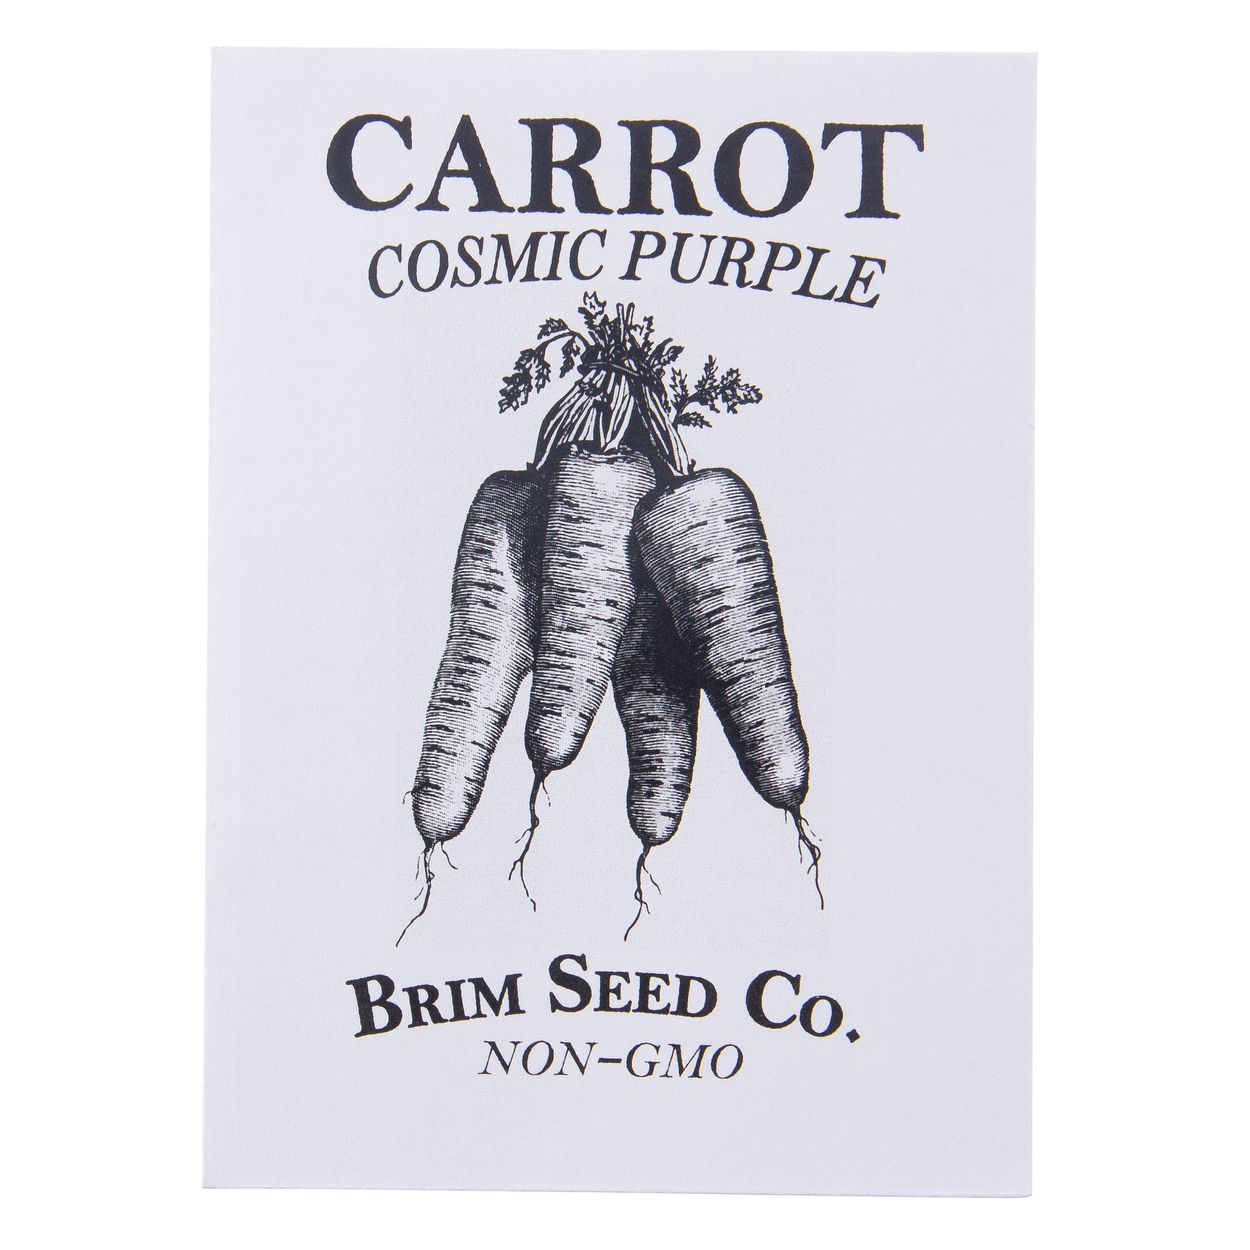 Brim Seed Co. - Cosmic Purple Carrot Seed